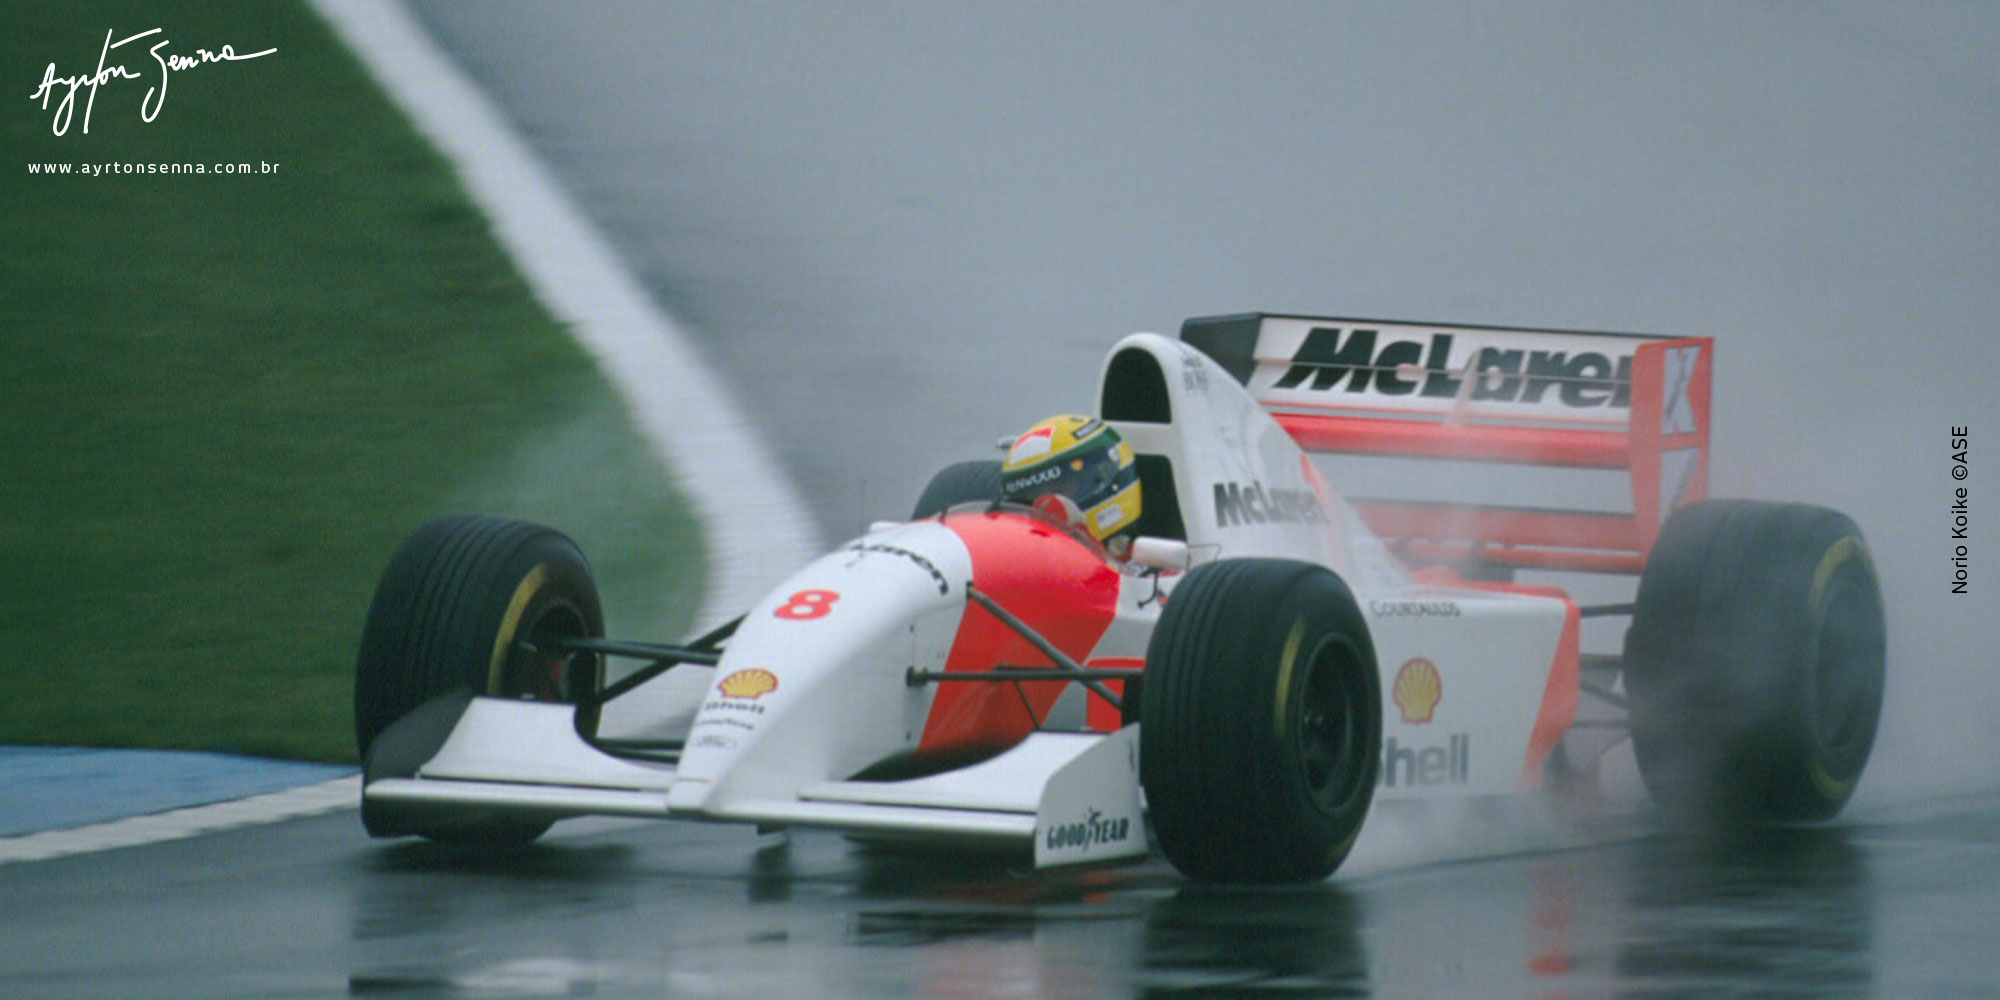 European Grand Prix – 1993 - The history of Ayrton Senna